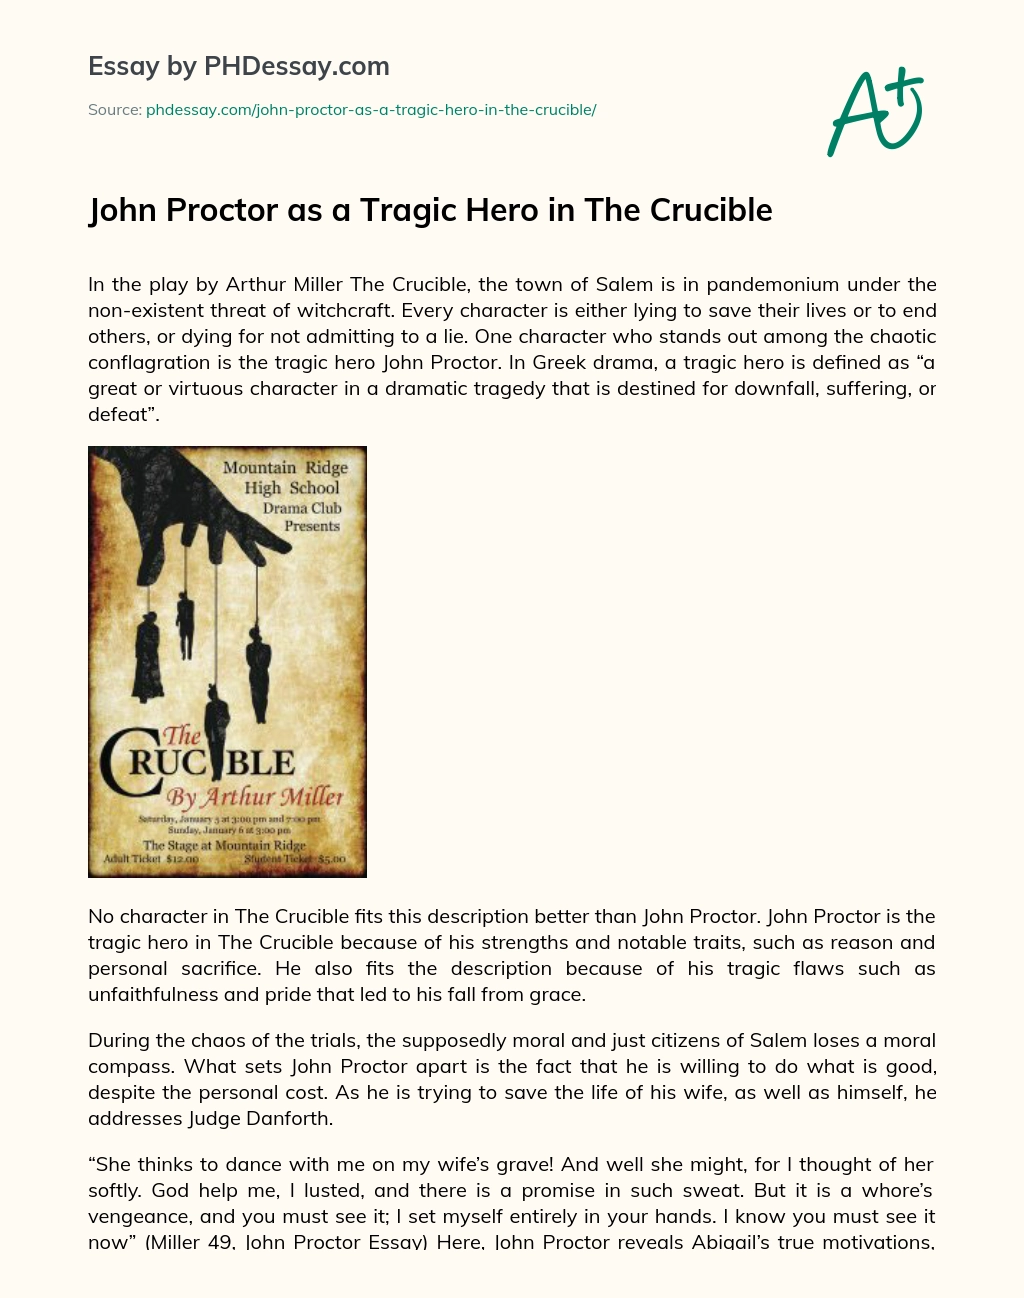 is john proctor a tragic hero essay